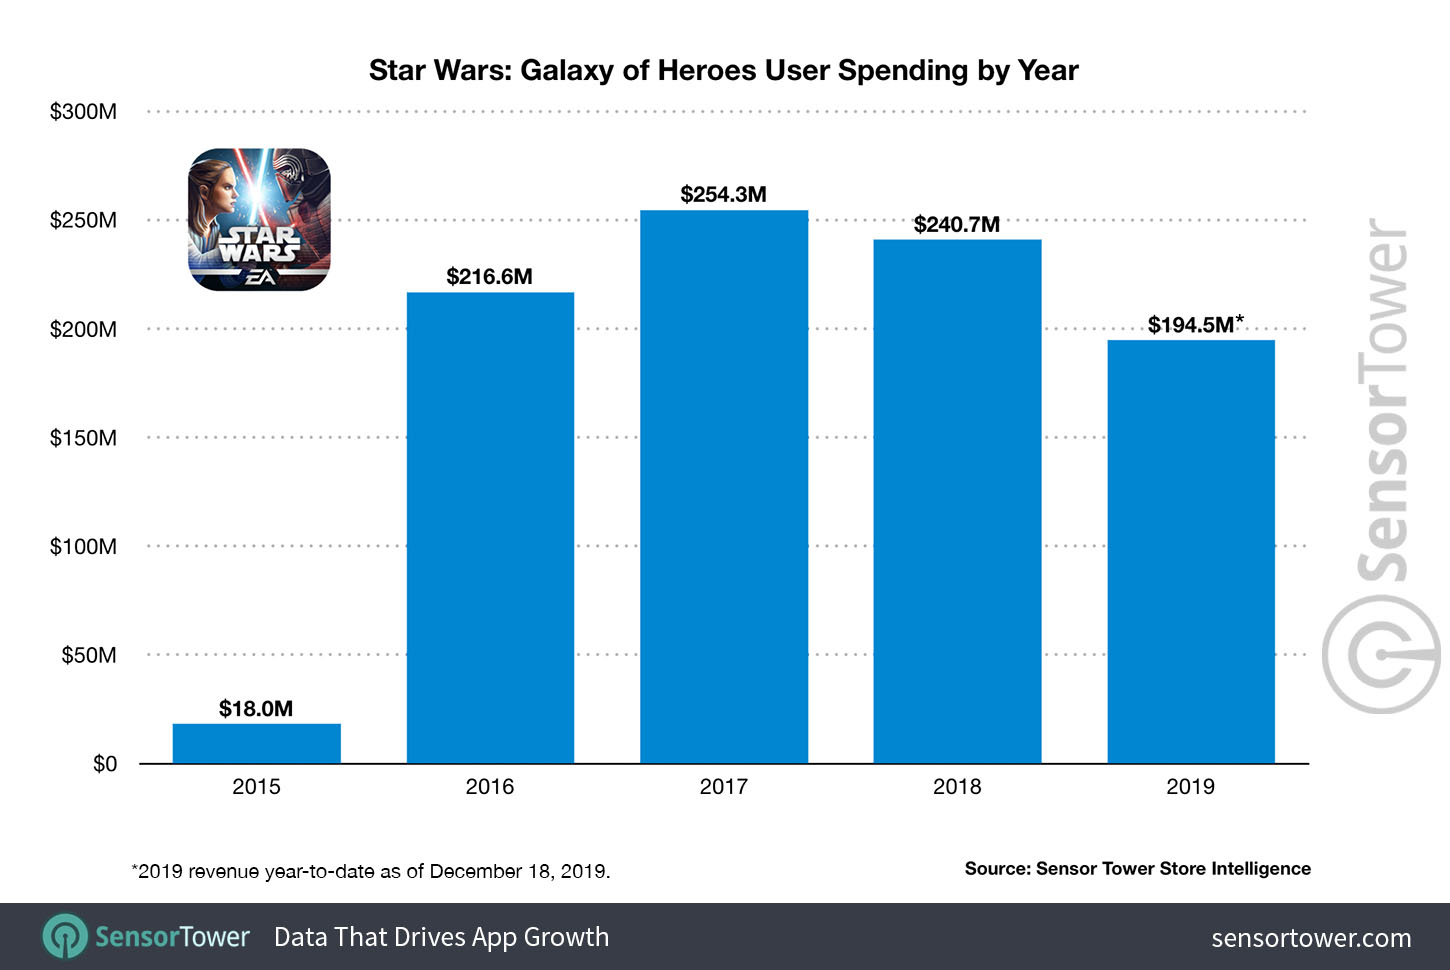 Star Wars: Galaxy of Heroes user spending by year